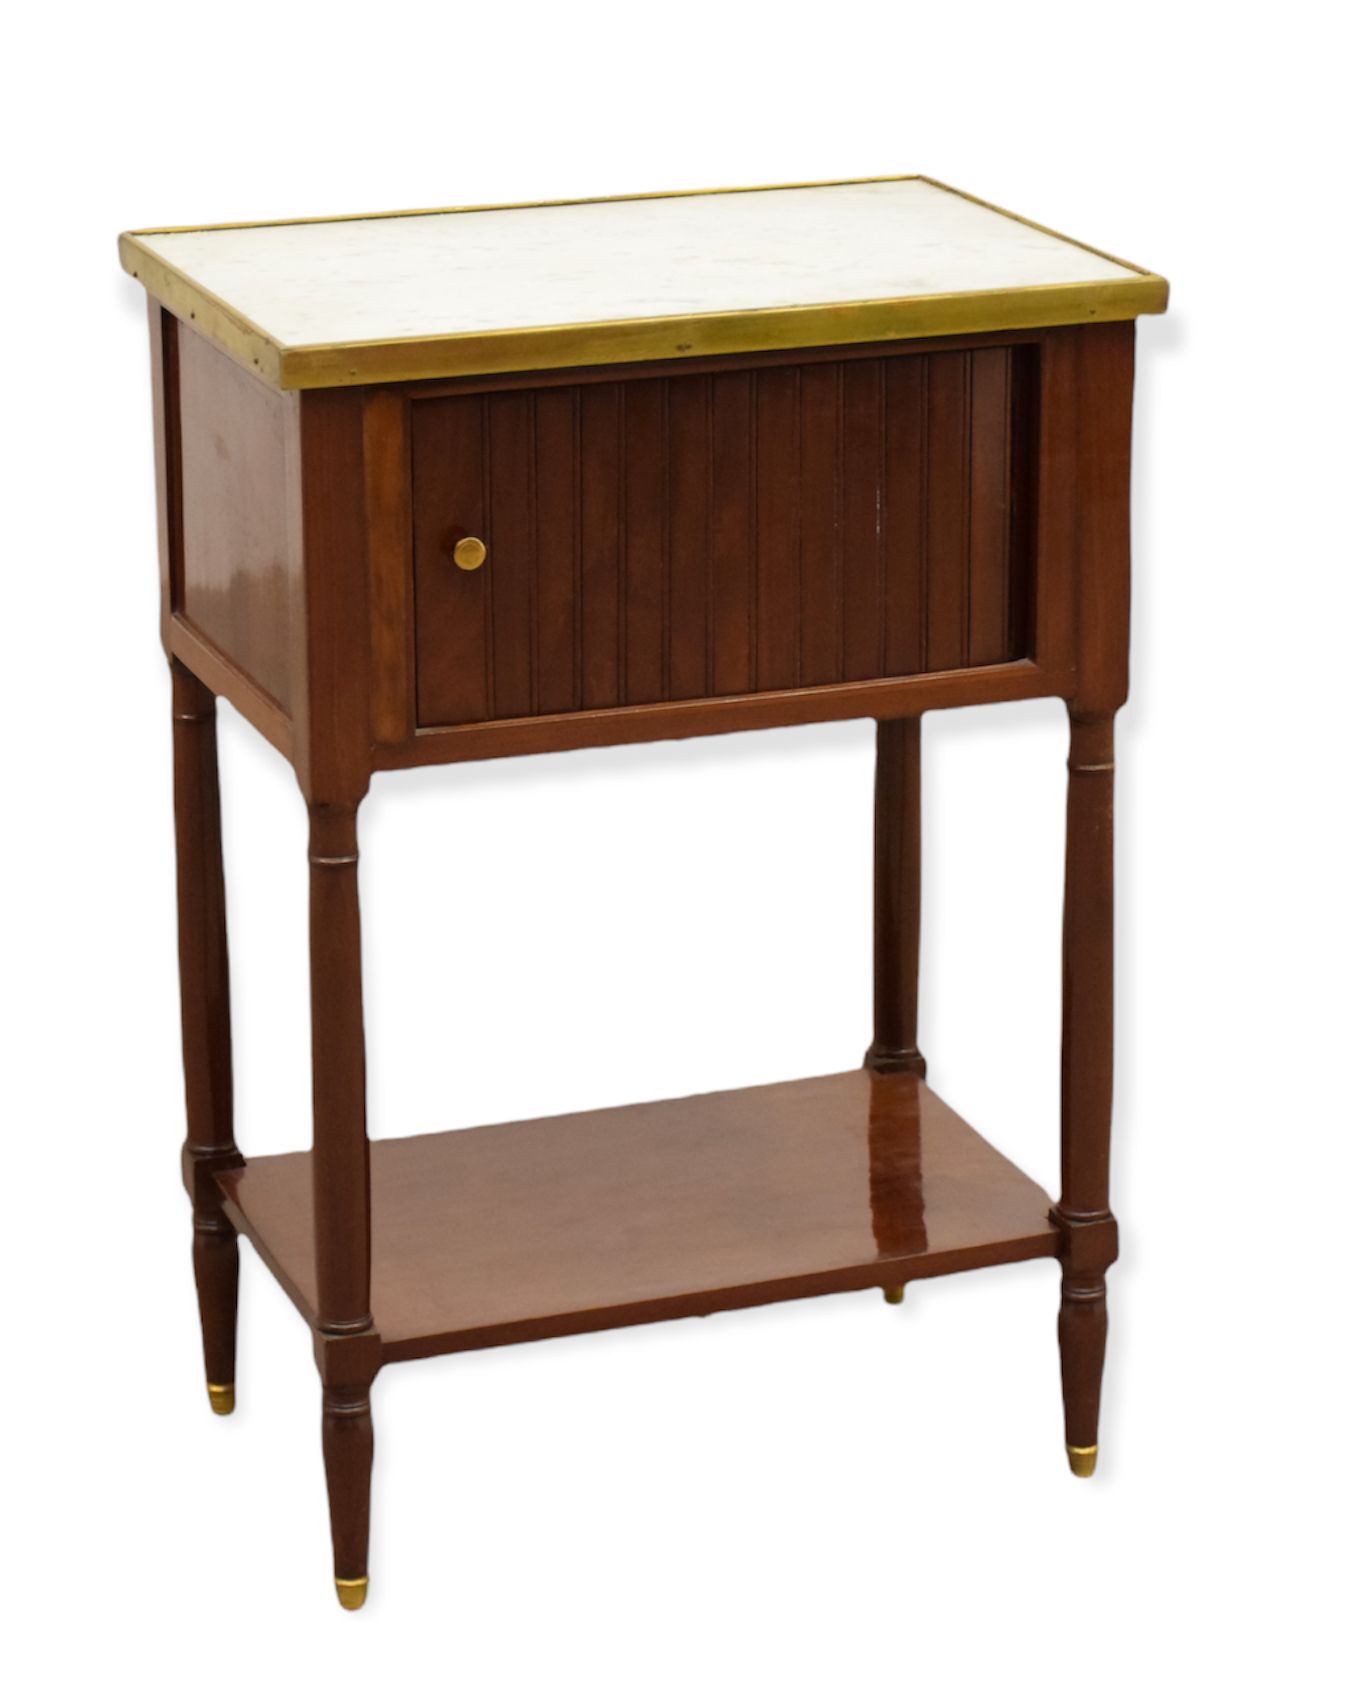 Null BEDSIDE TABLE

In mahogany and mahogany veneer, rectangular in shape, it co&hellip;